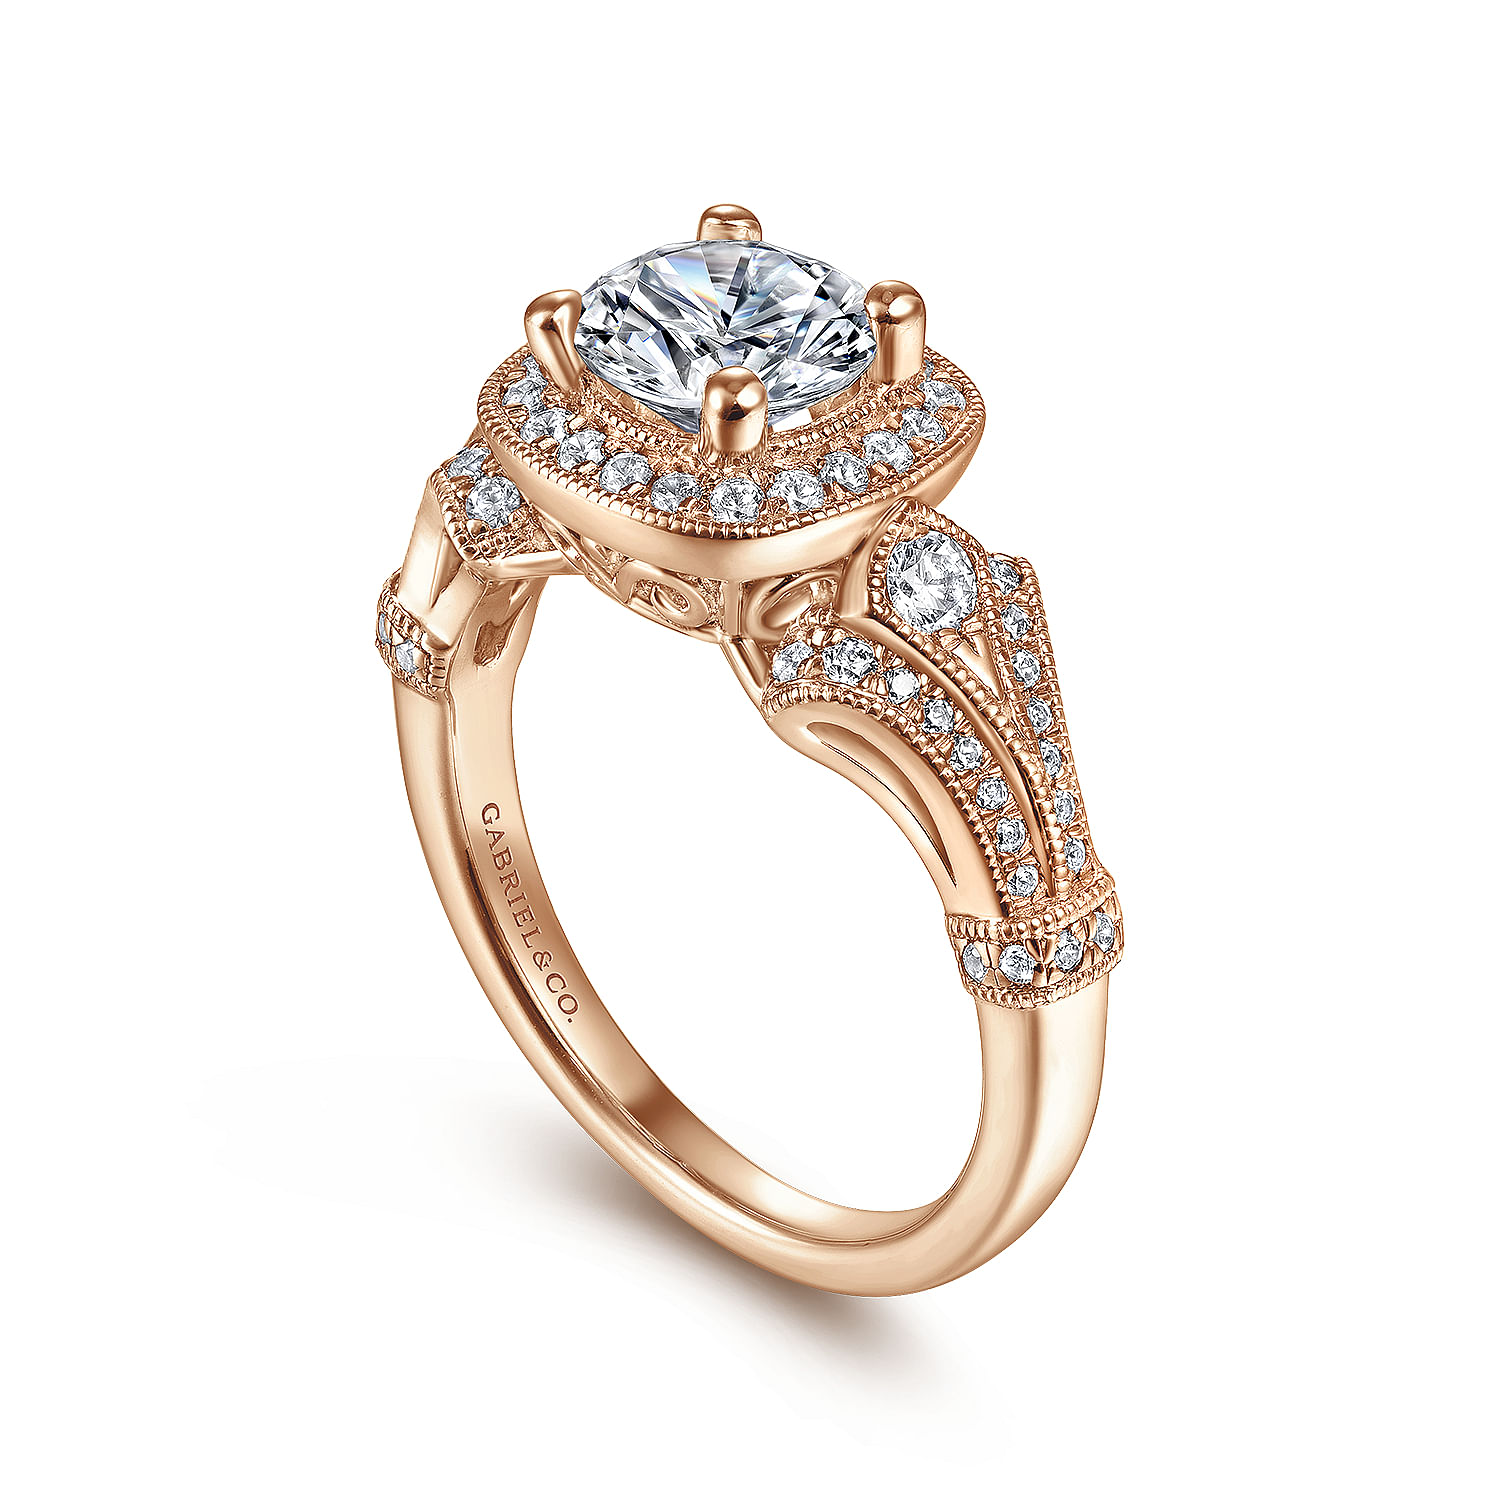 Vintage Inspired 14K Rose Gold Cushion Halo Round Diamond Engagement Ring